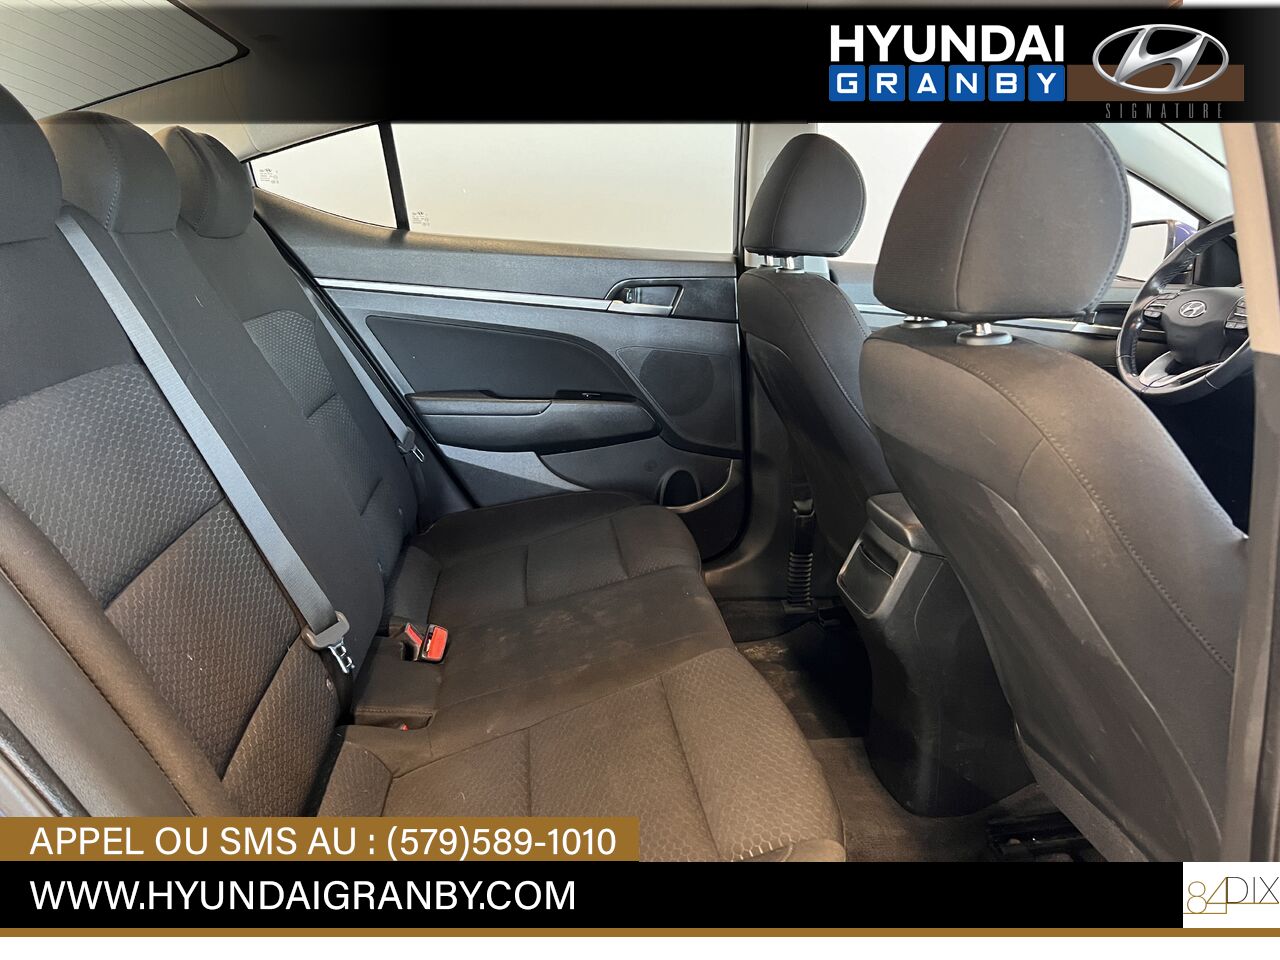 Hyundai Elantra 2019 Granby - photo #24